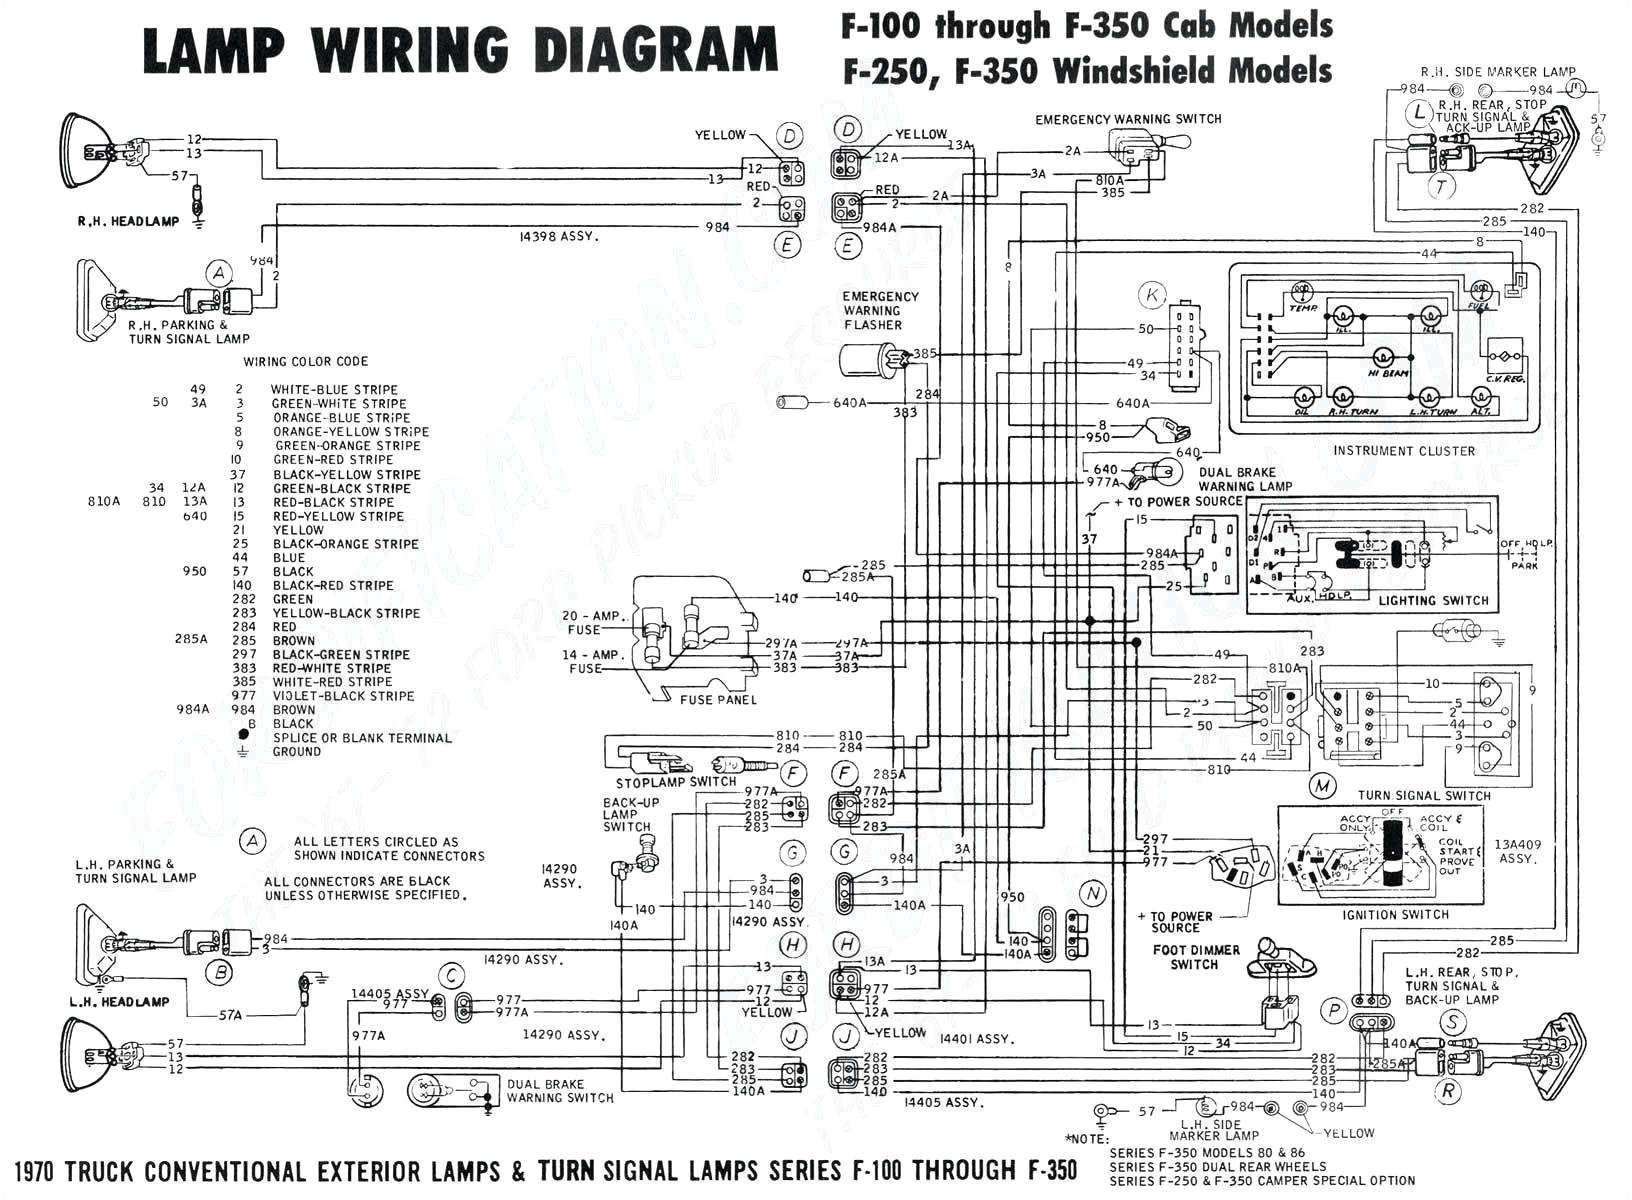 harley wiring diagrams simple luxury harley wiring diagrams simpleharley wiring diagrams simple inspirational big dog chopper